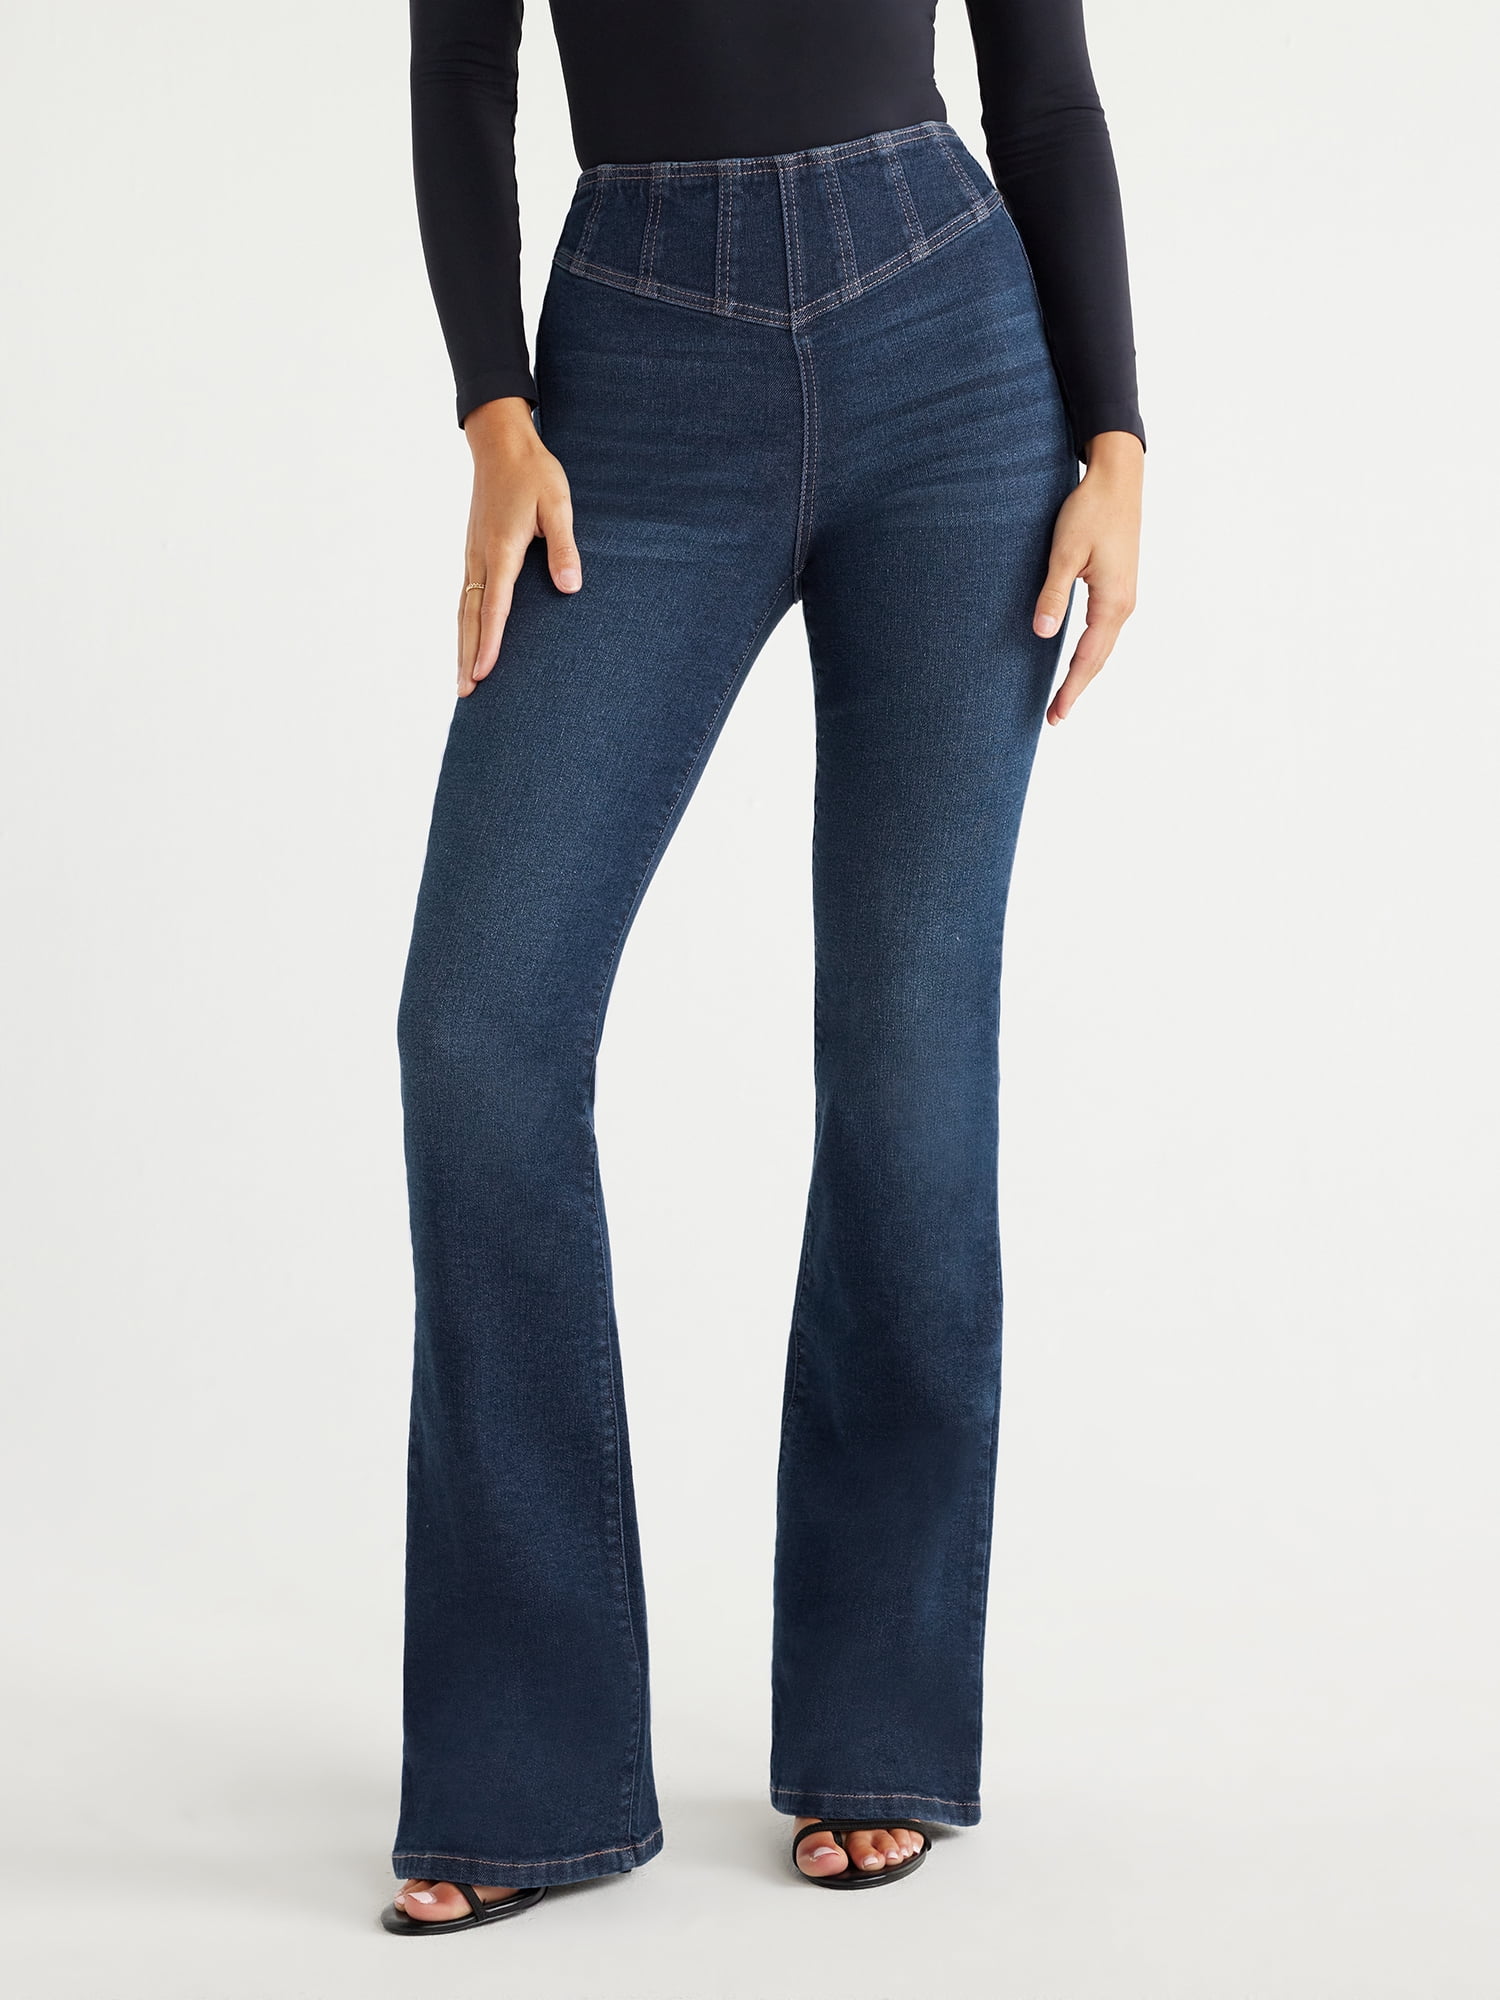 Sofia Jeans Women's Melisa Curvy Flare Super High Rise Corset Jeans, 33 ...